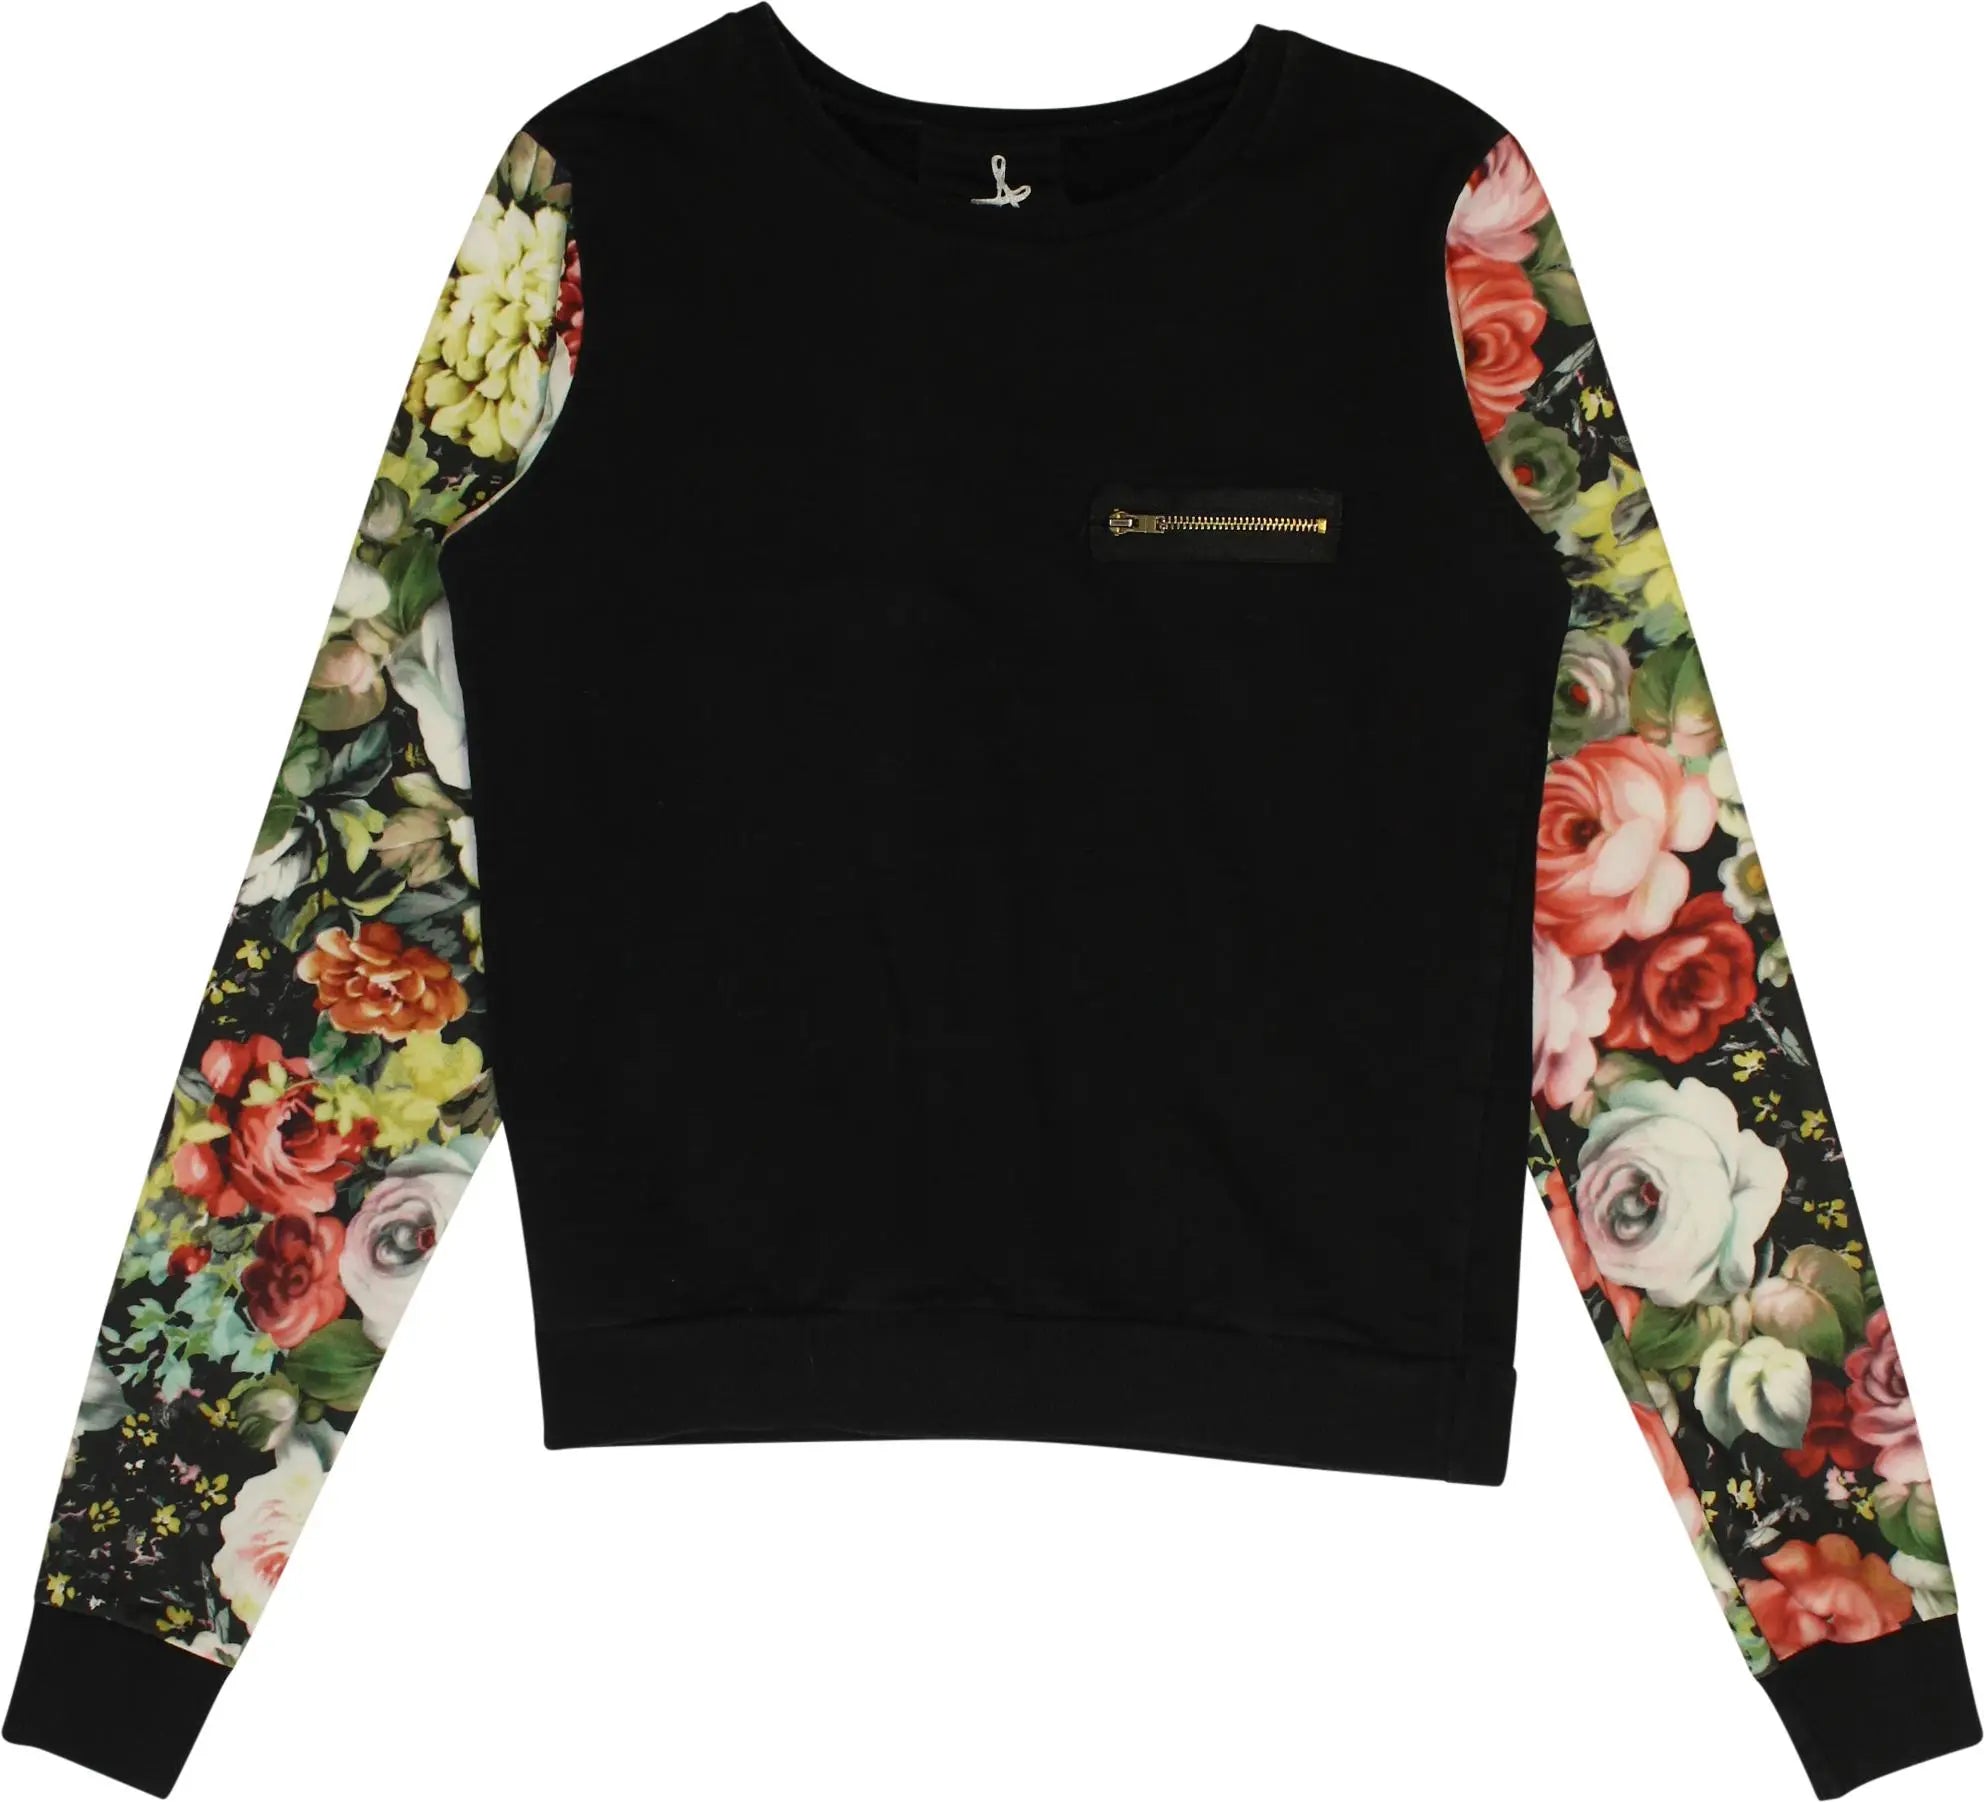 Primark - Black Sweatshirt- ThriftTale.com - Vintage and second handclothing